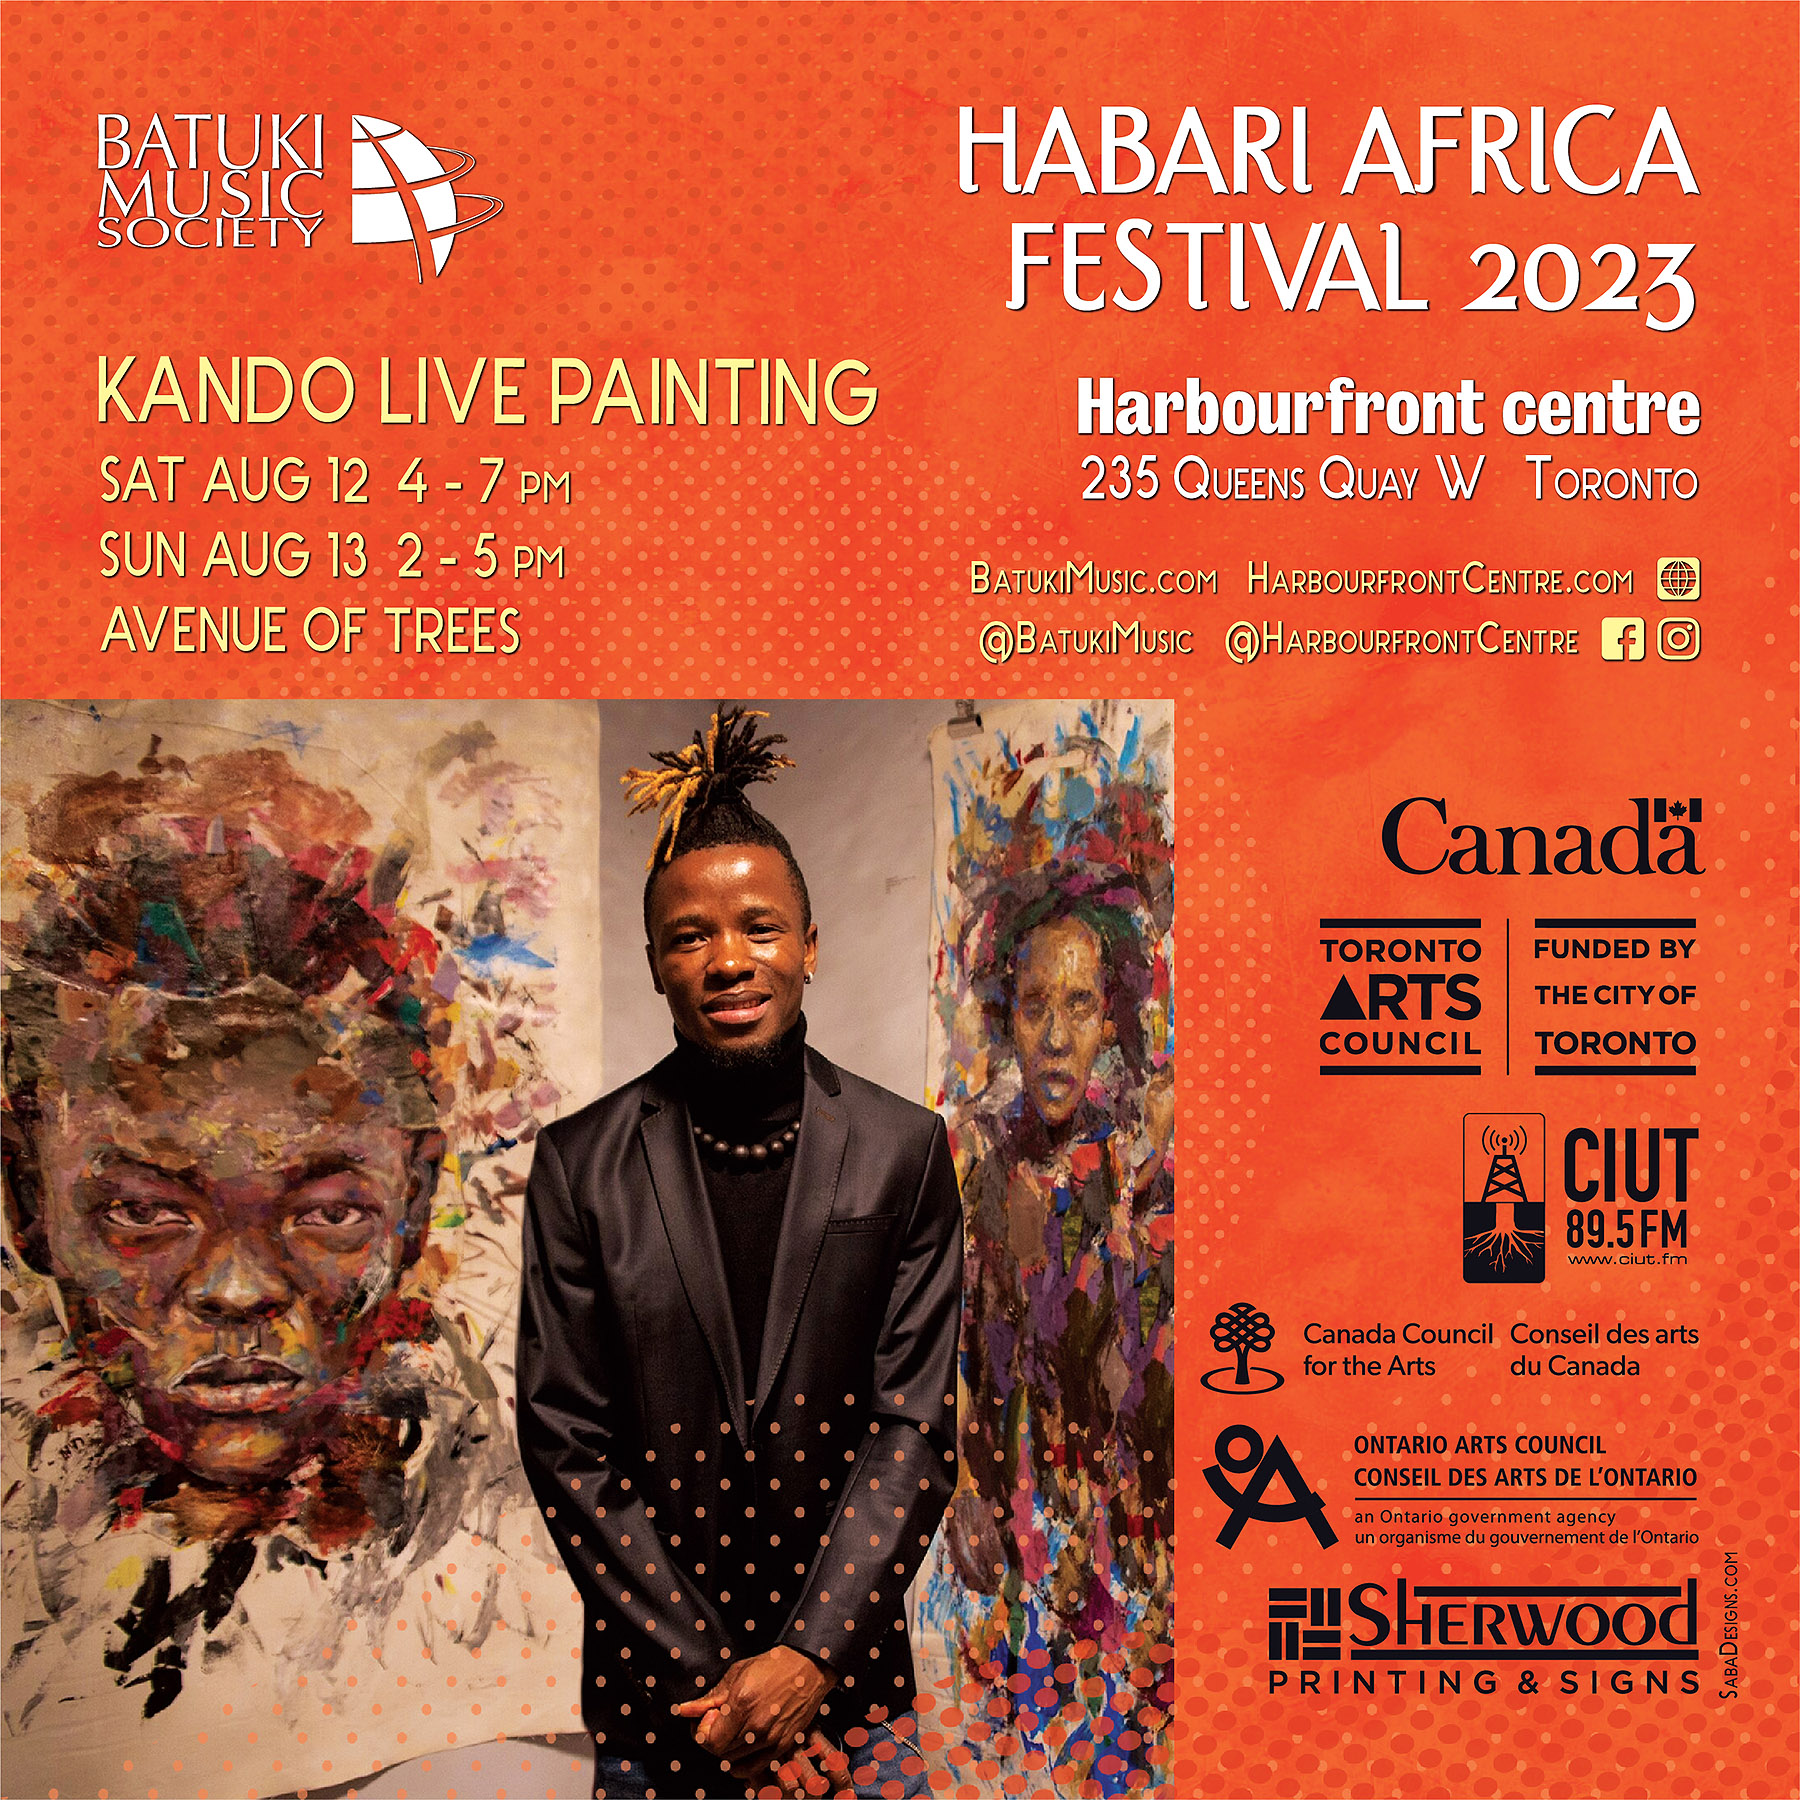 Habari Africa Live Festival 2023 by Batuki Music Society Kando Paint